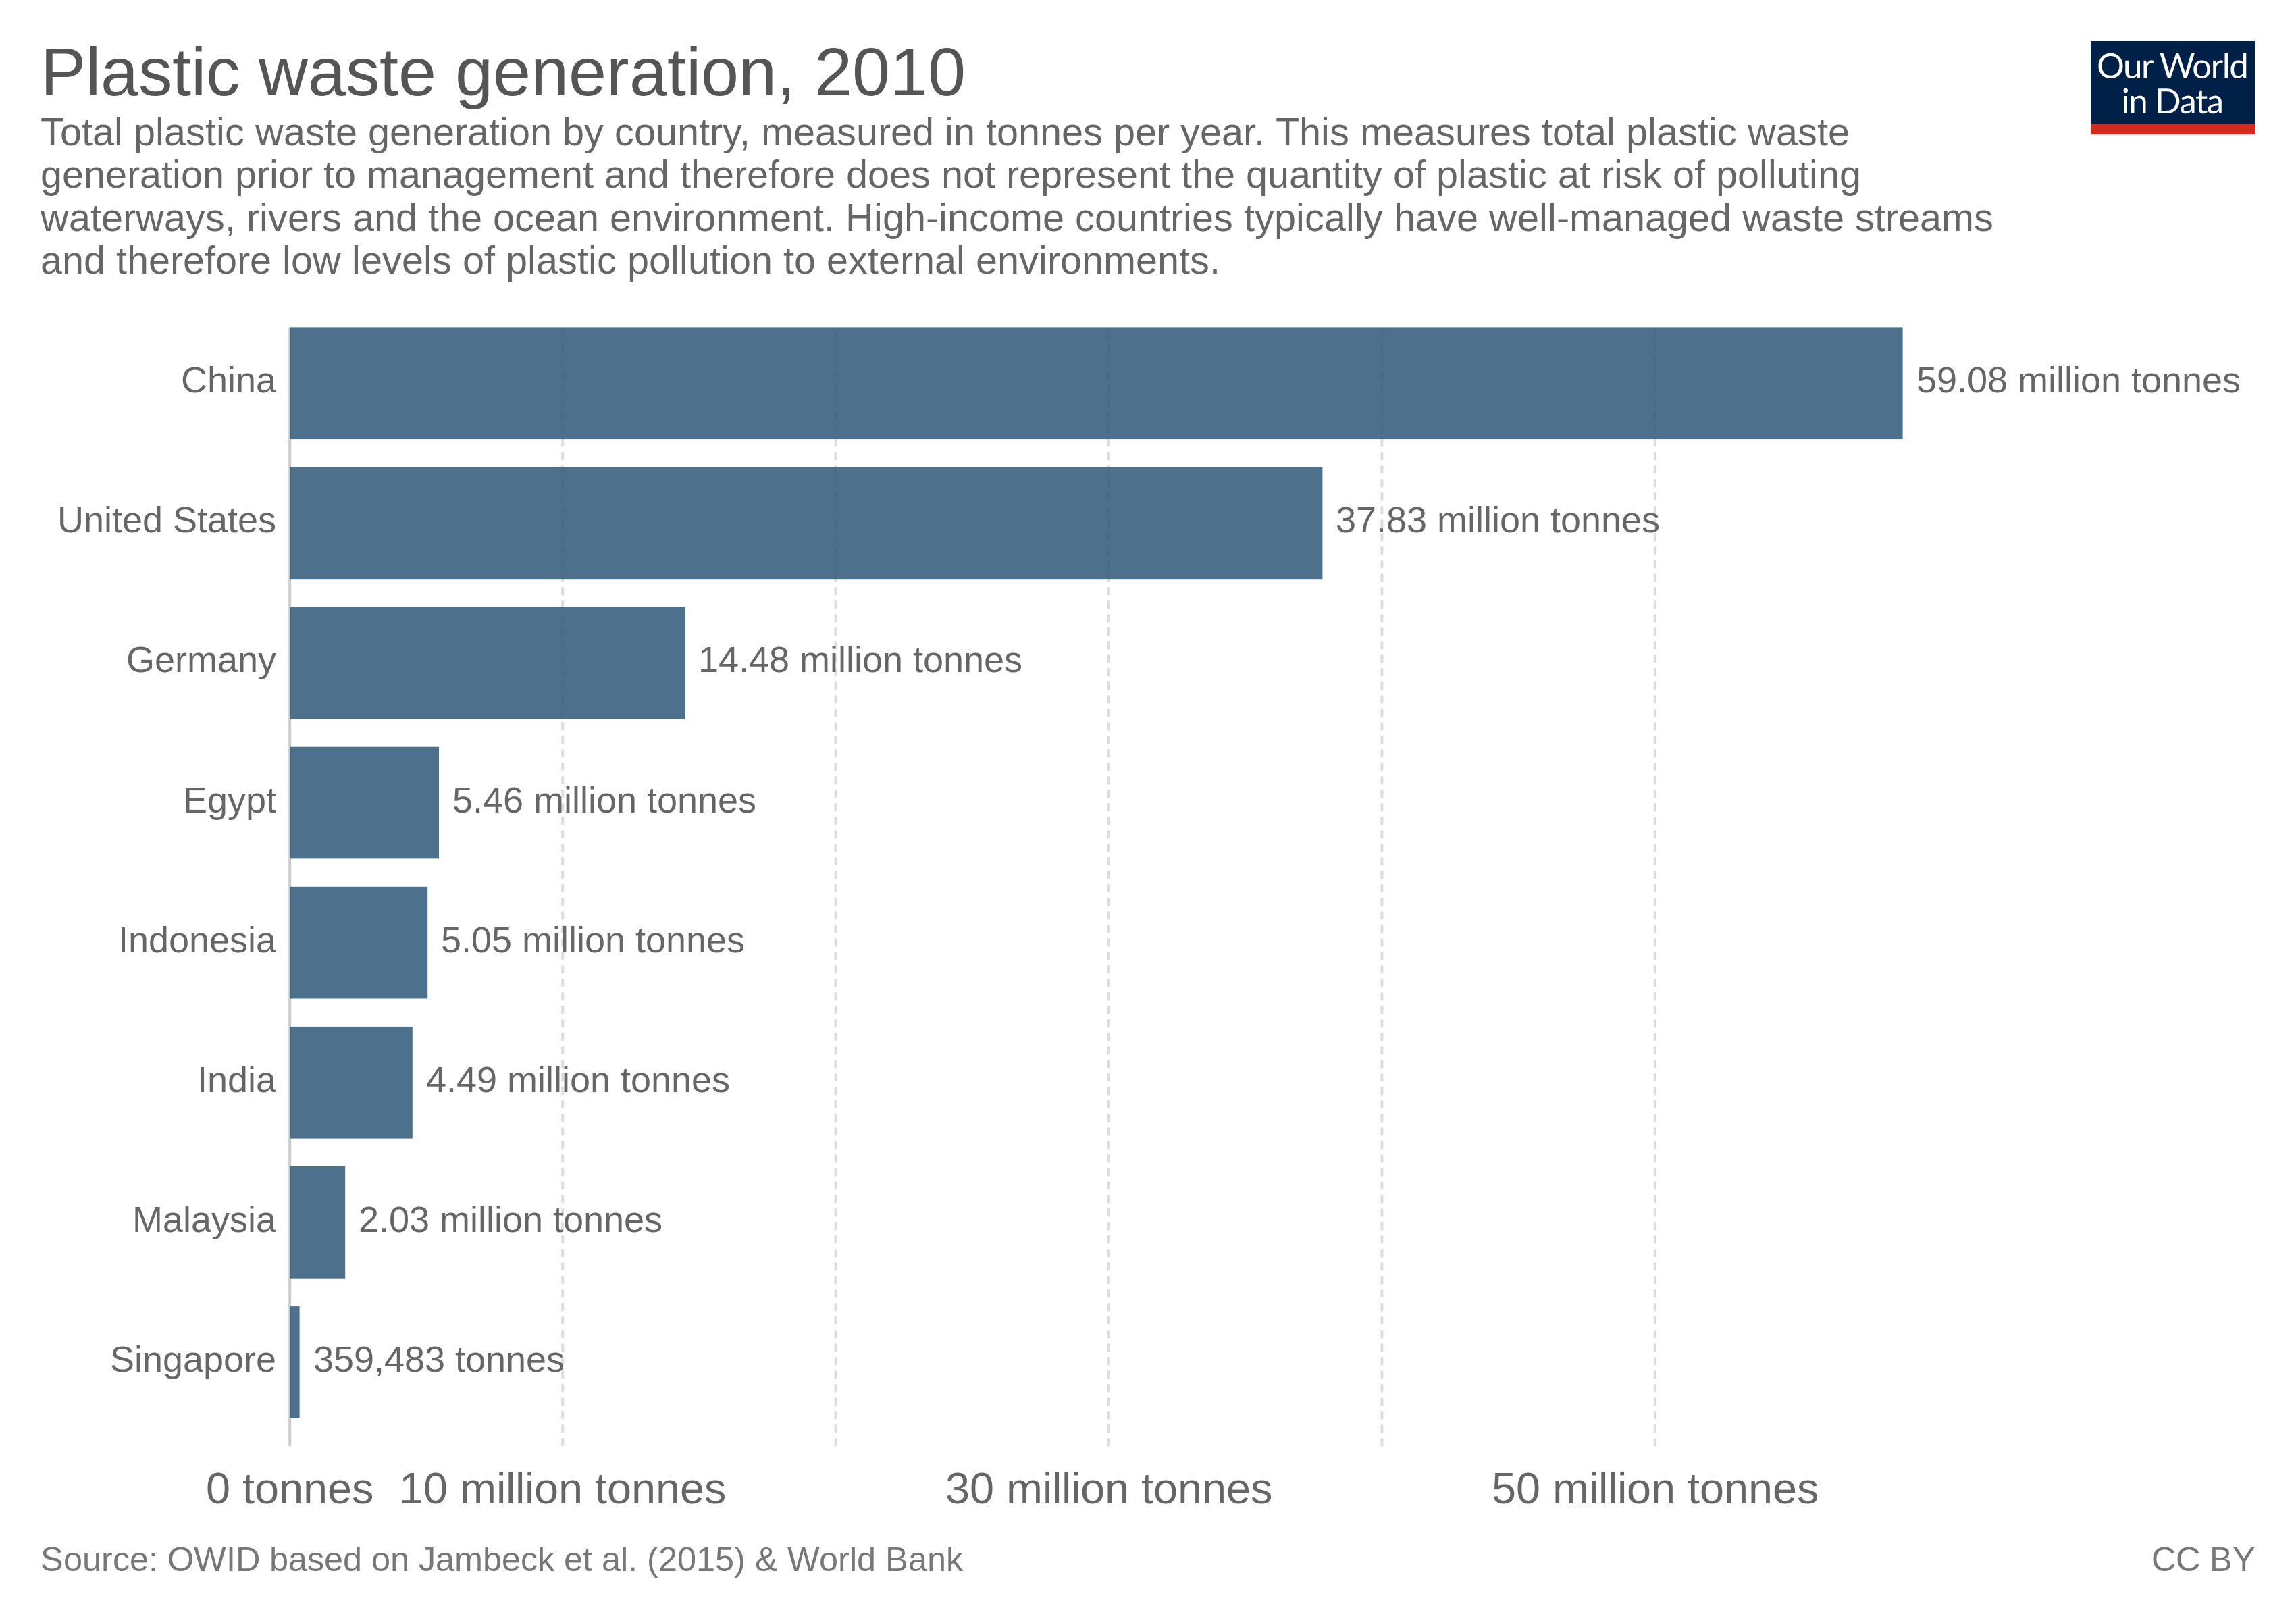 Plastic waste generation data